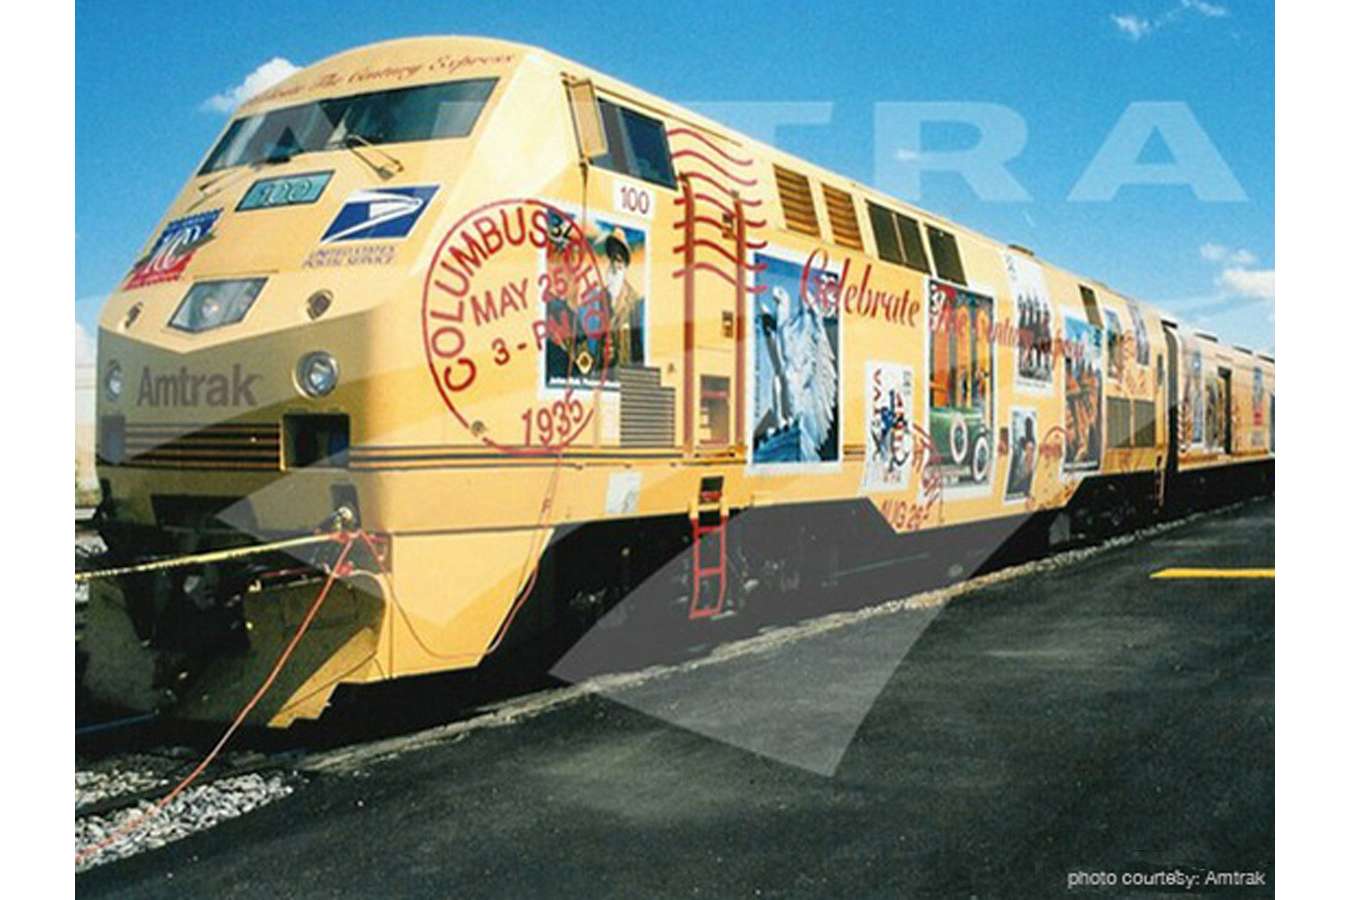 CTC_1amtrak_Prev_Amtrak : Amtrak Train 100: The US Postal Service Celebrate the Century Express